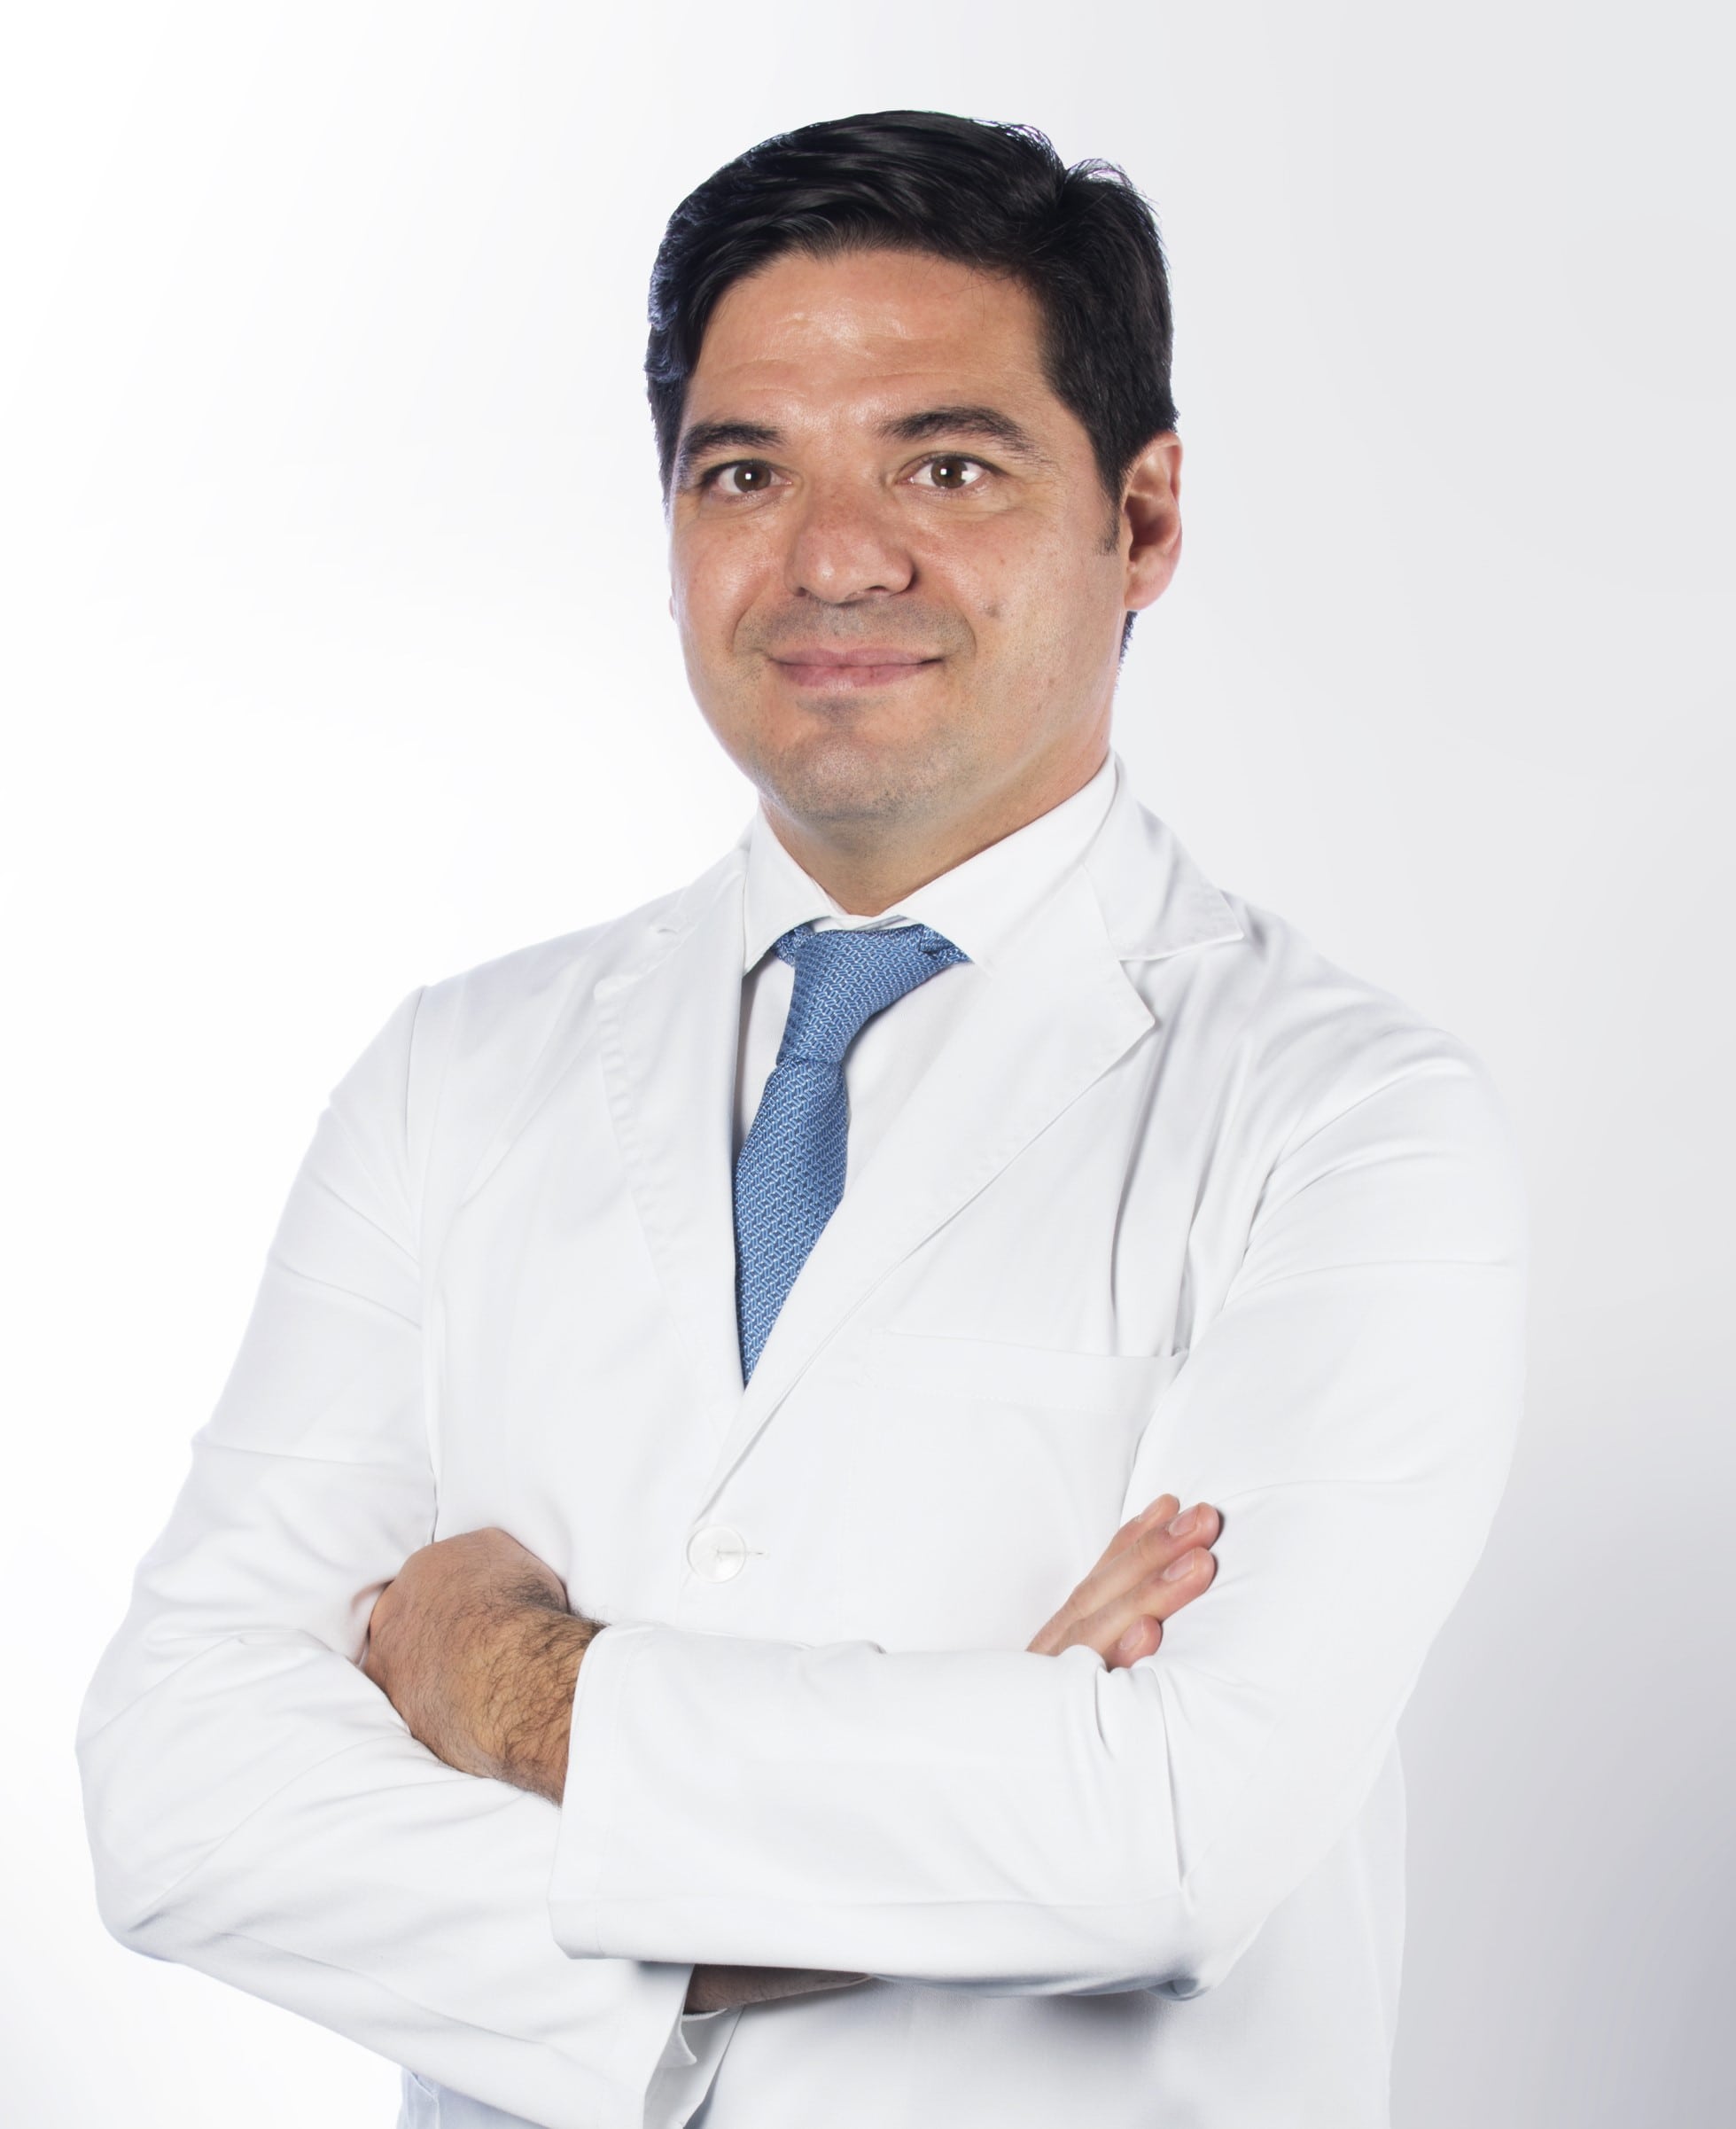 Dr. Ramón Torres